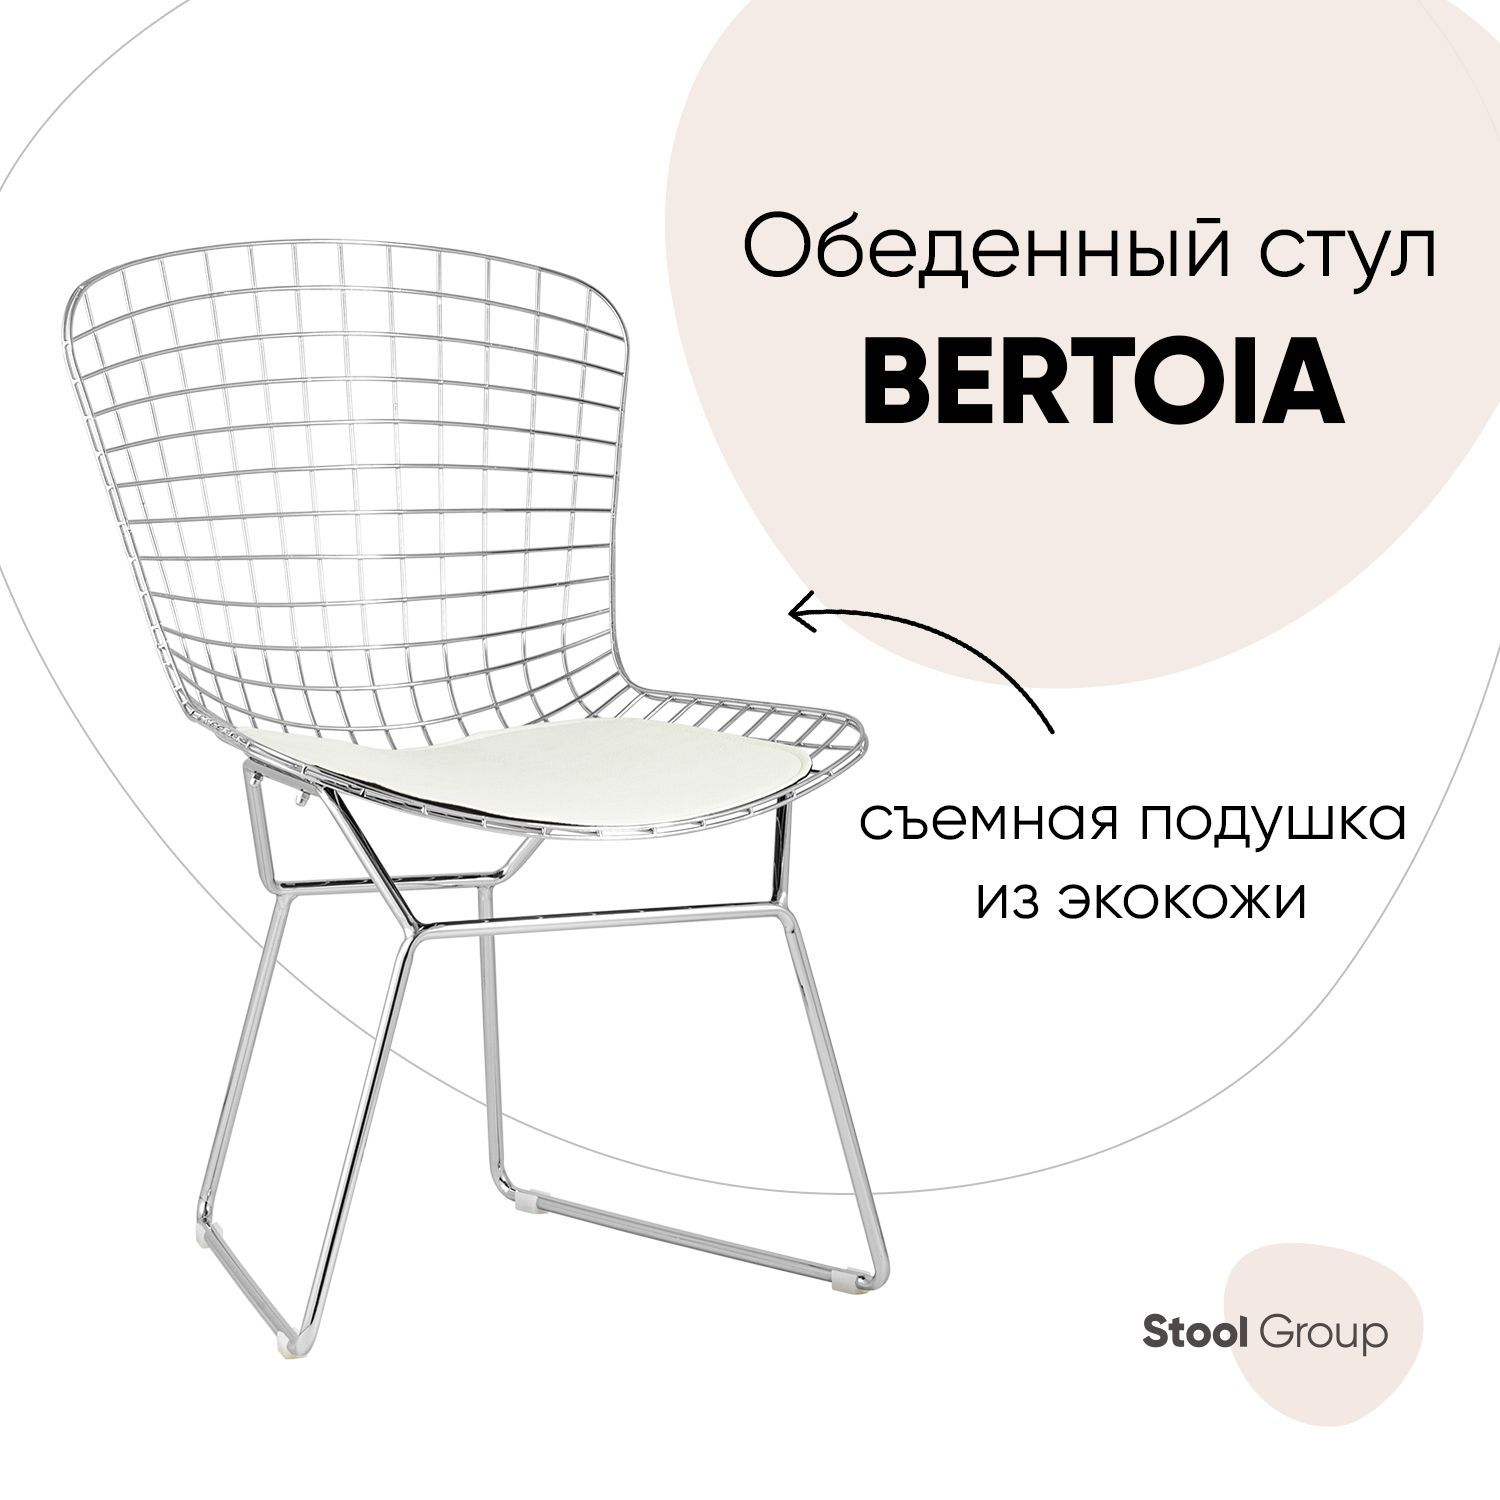 90474081 Стул кухонный Bertoia 83х56х53 см экокожа цвет серебристый BTY-18-P6-CH-WH Anji BOHAO Furniture CO., Ltd STLM-0242373 СТУЛ ГРУП